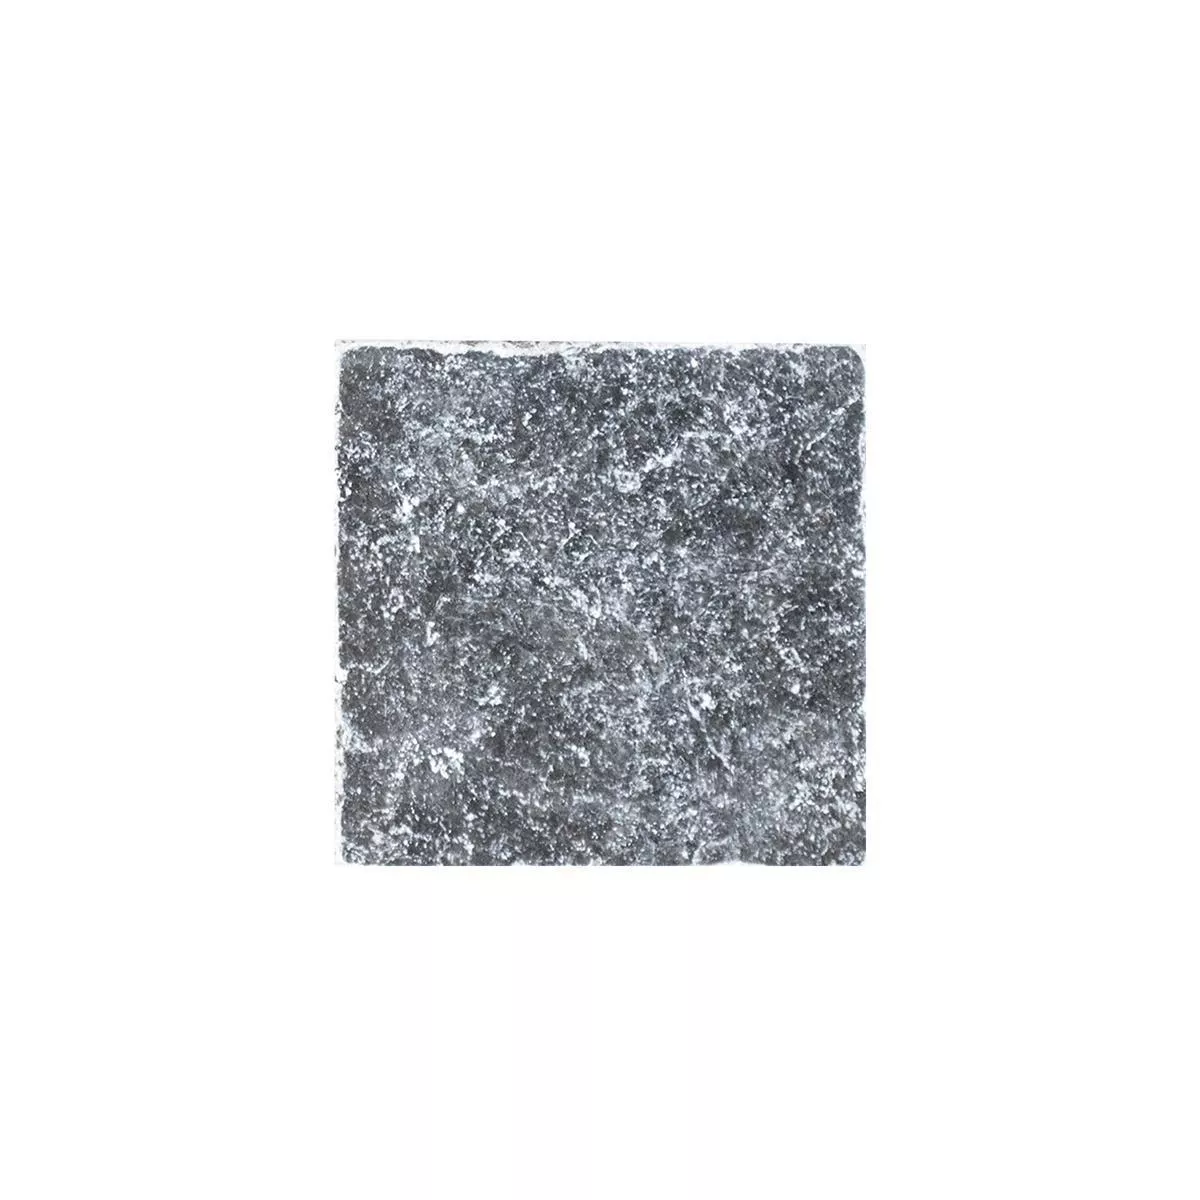 Sample Natural Stone Tiles Marble Visso Nero 10x10cm